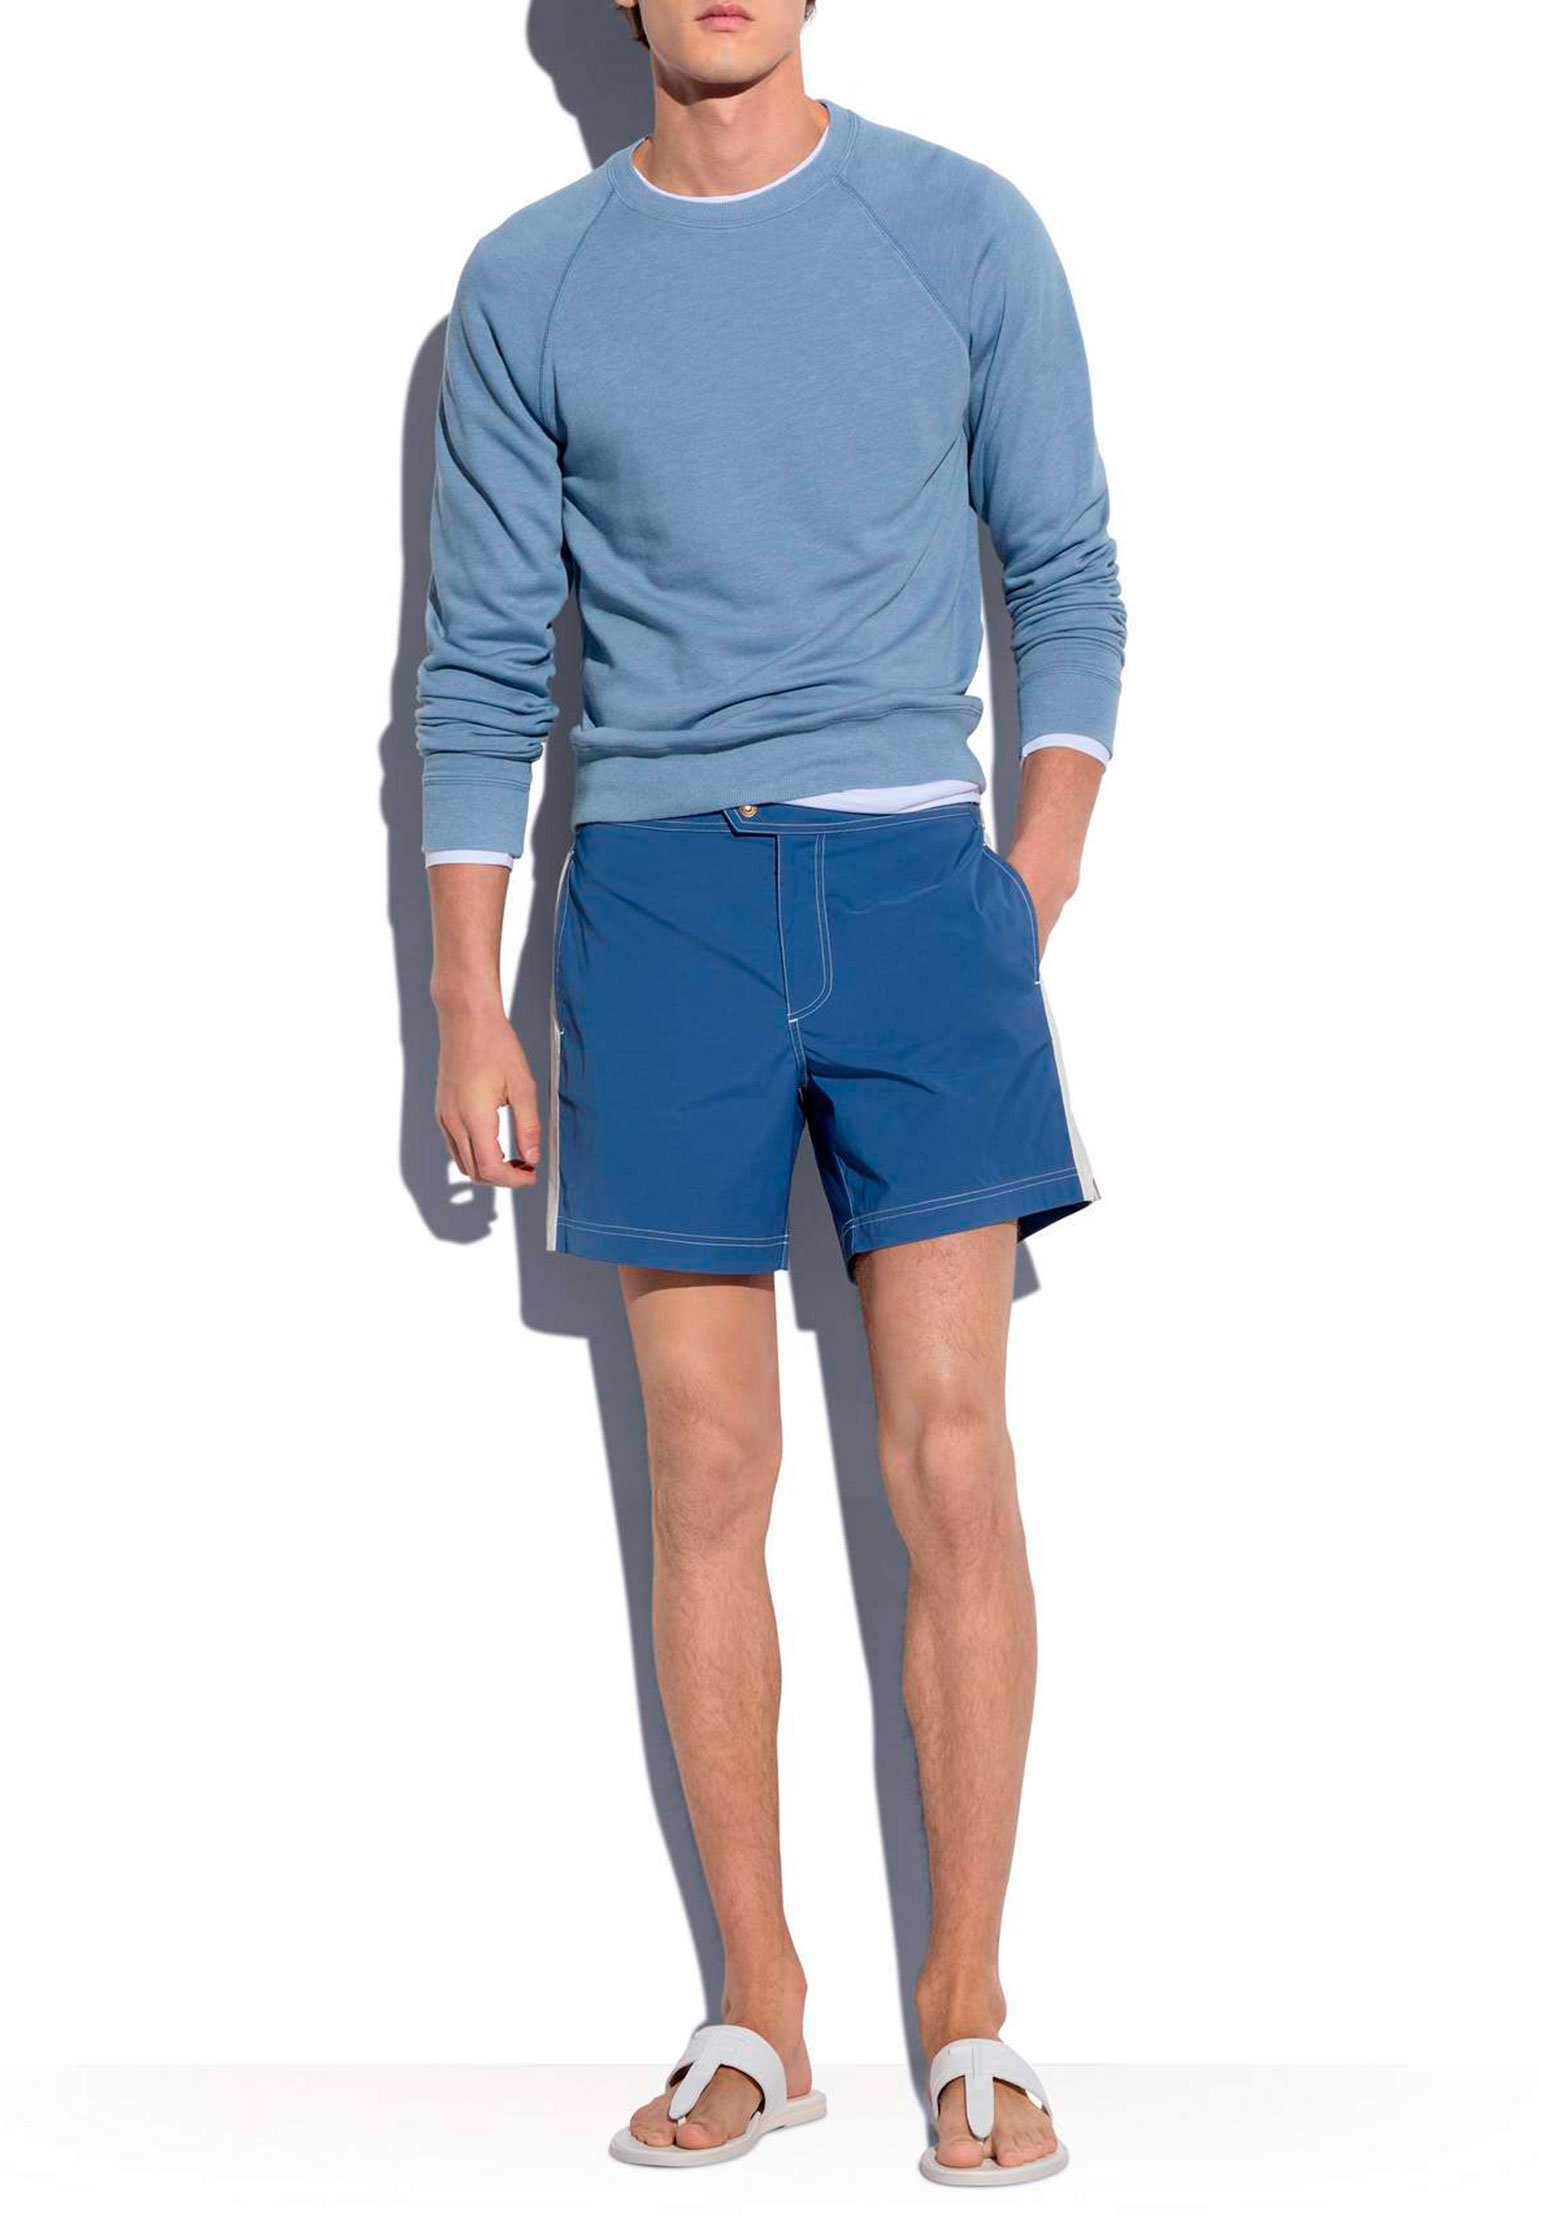 Beachwear TOM FORD Color: blue (Code: 1160) in online store Allure